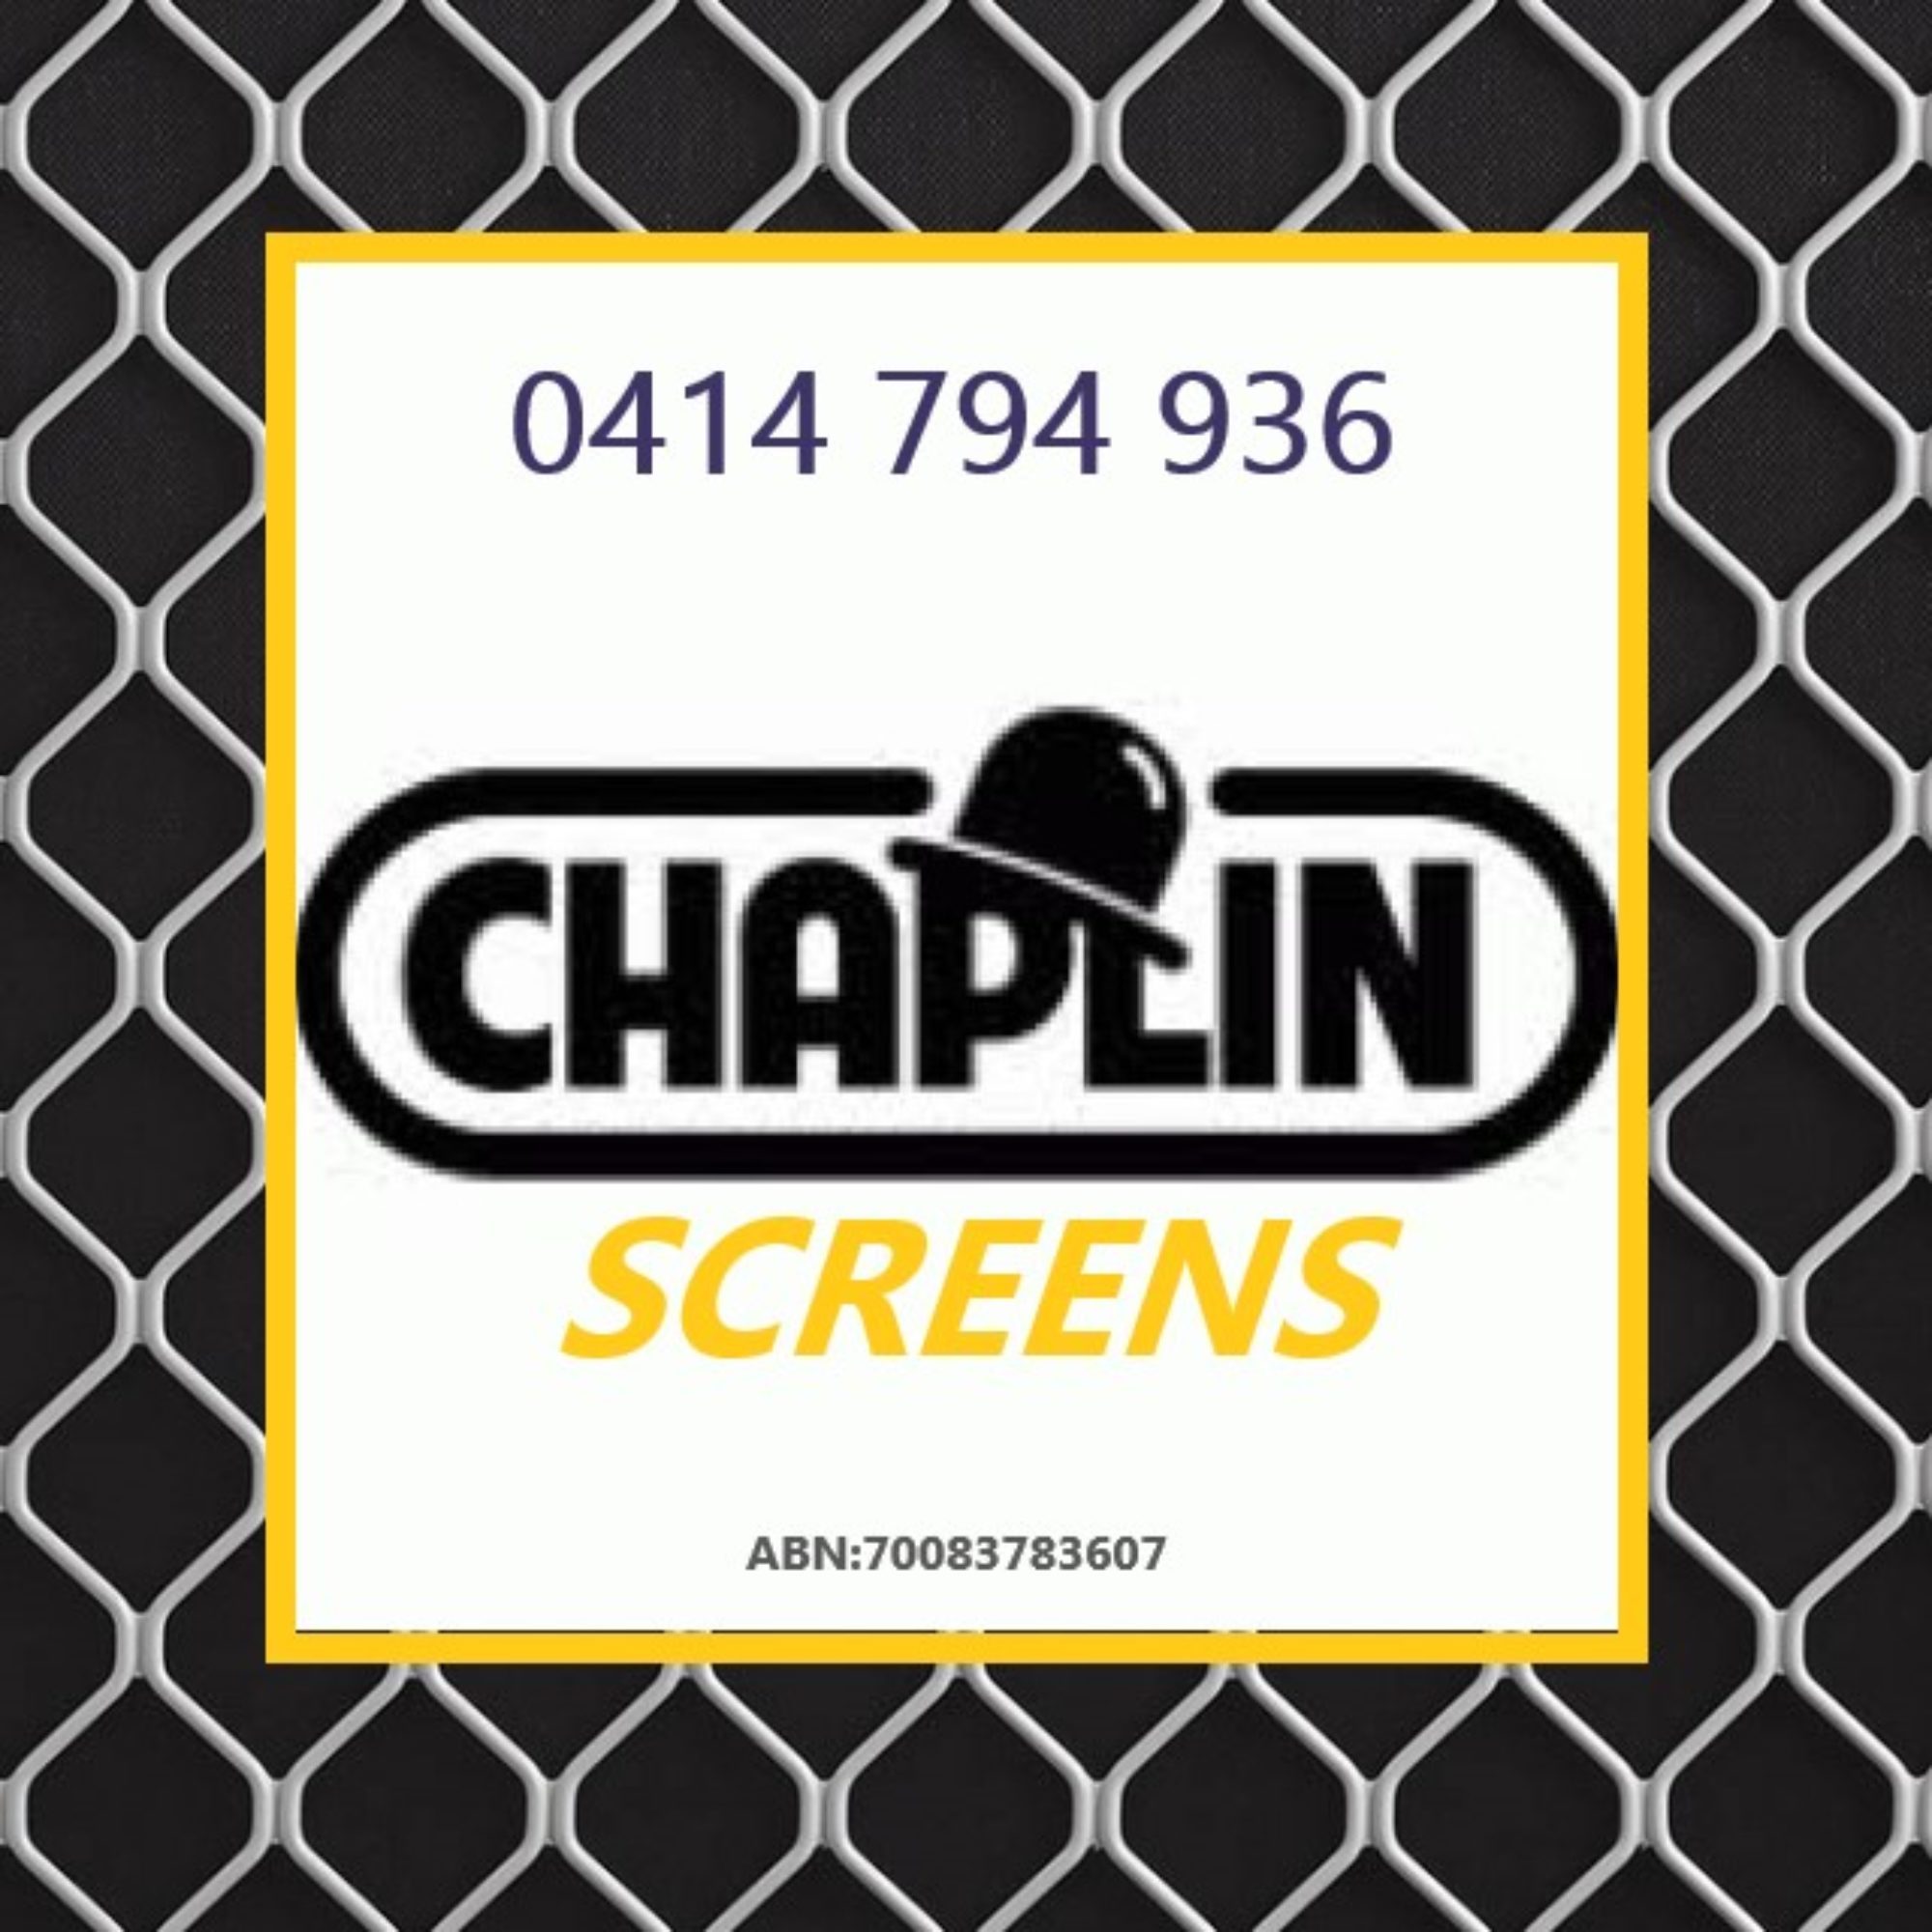 Chaplin Screens